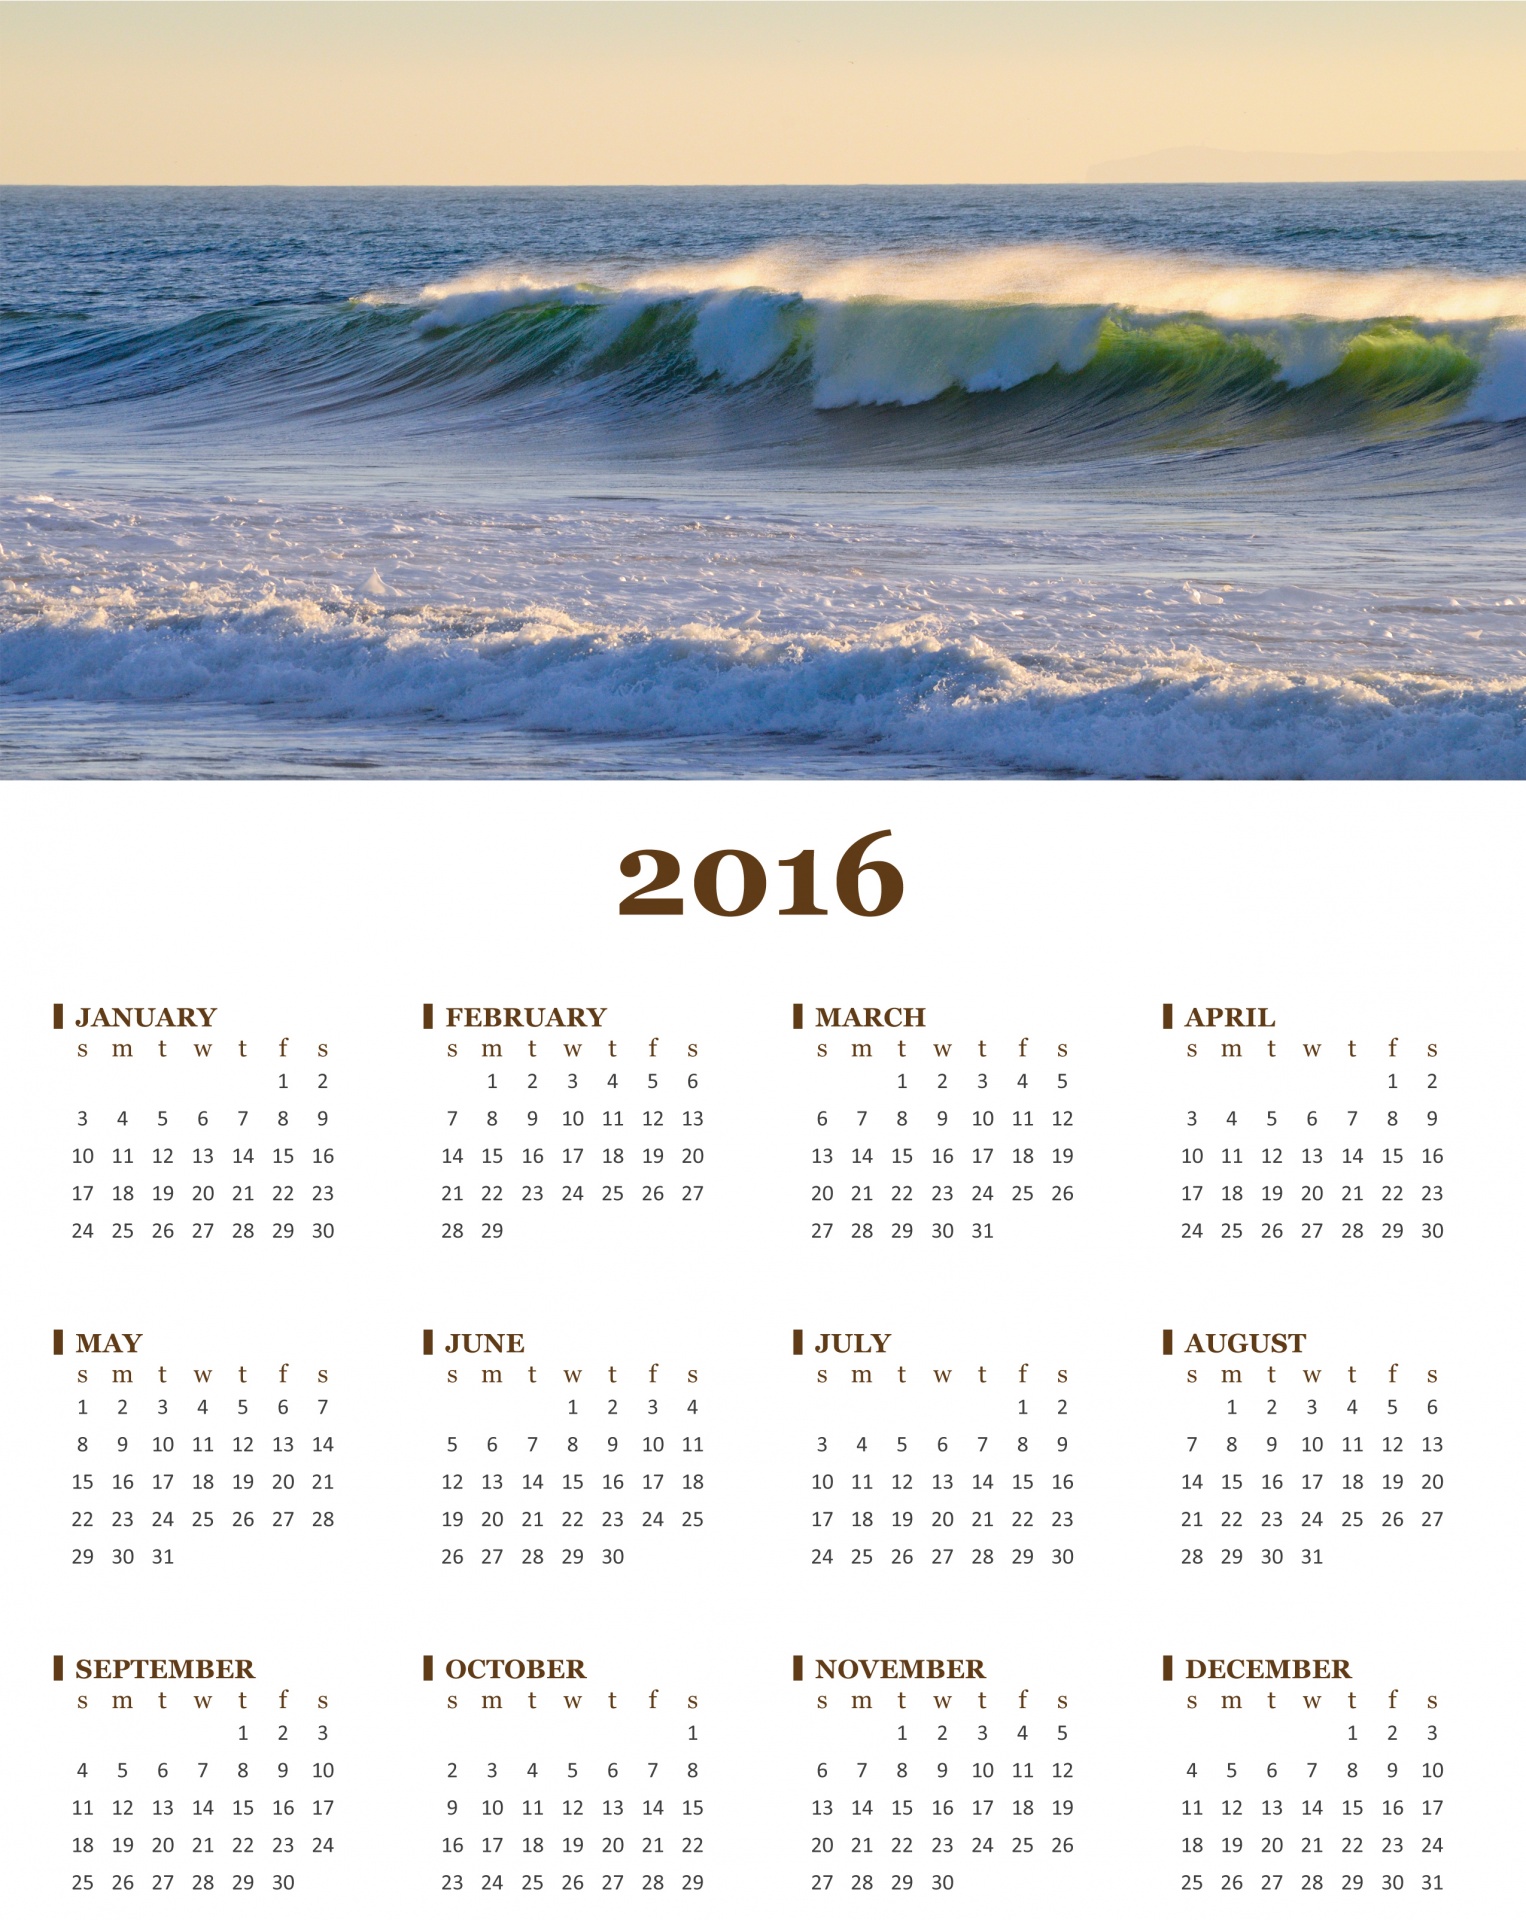 2016 2016 calendar annual calendar free photo